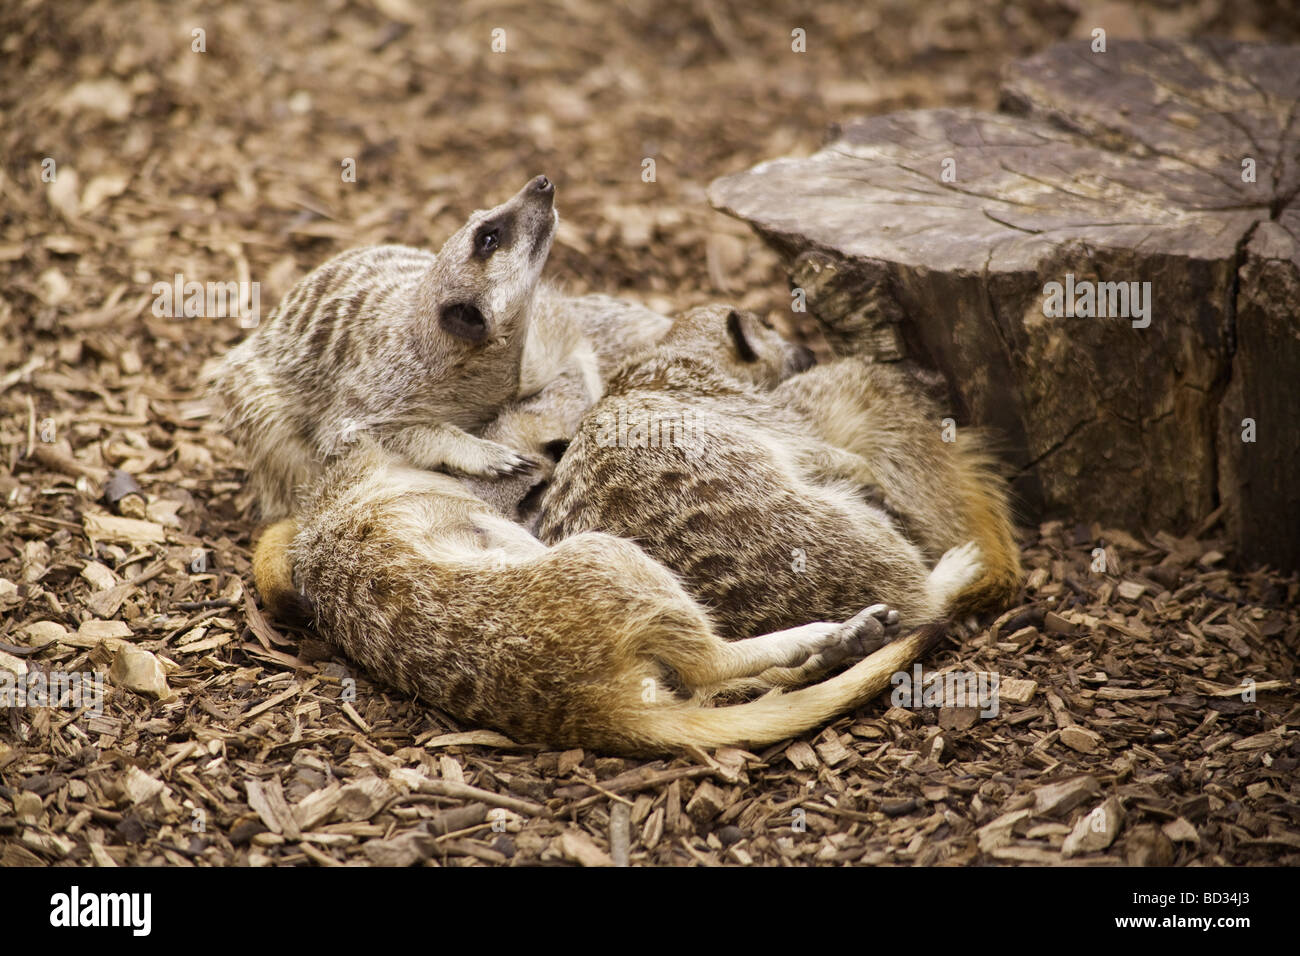 Meerkat family huddled together Stock Photo